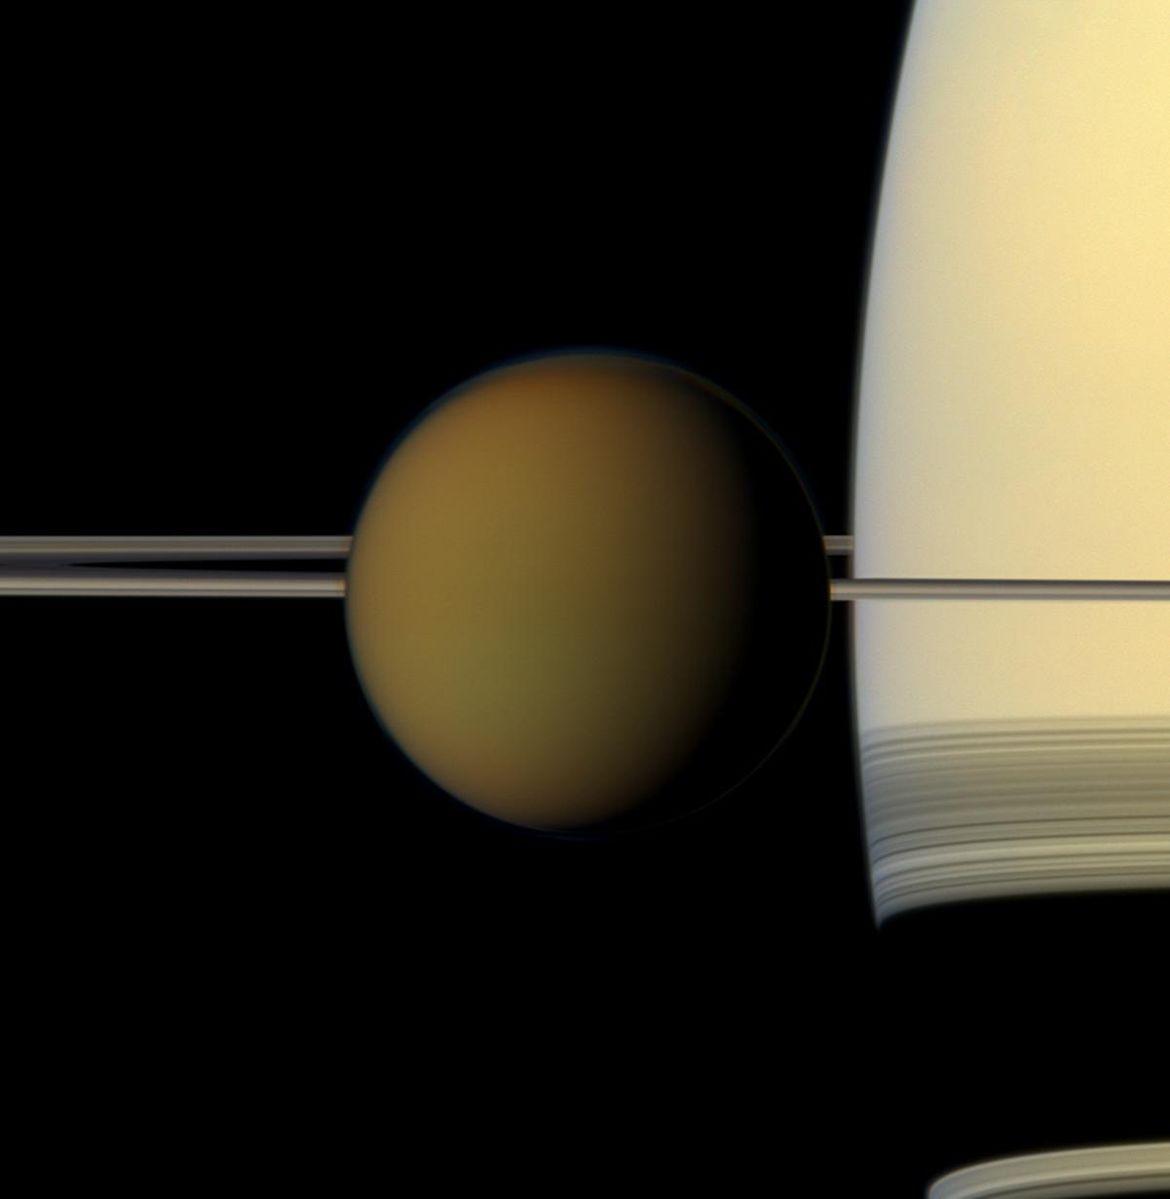 (<a href="https://en.wikipedia.org/wiki/File:Titan_and_rings_PIA14909.jpg">NASA/JPL-Caltech/Space Science Institute</a>)